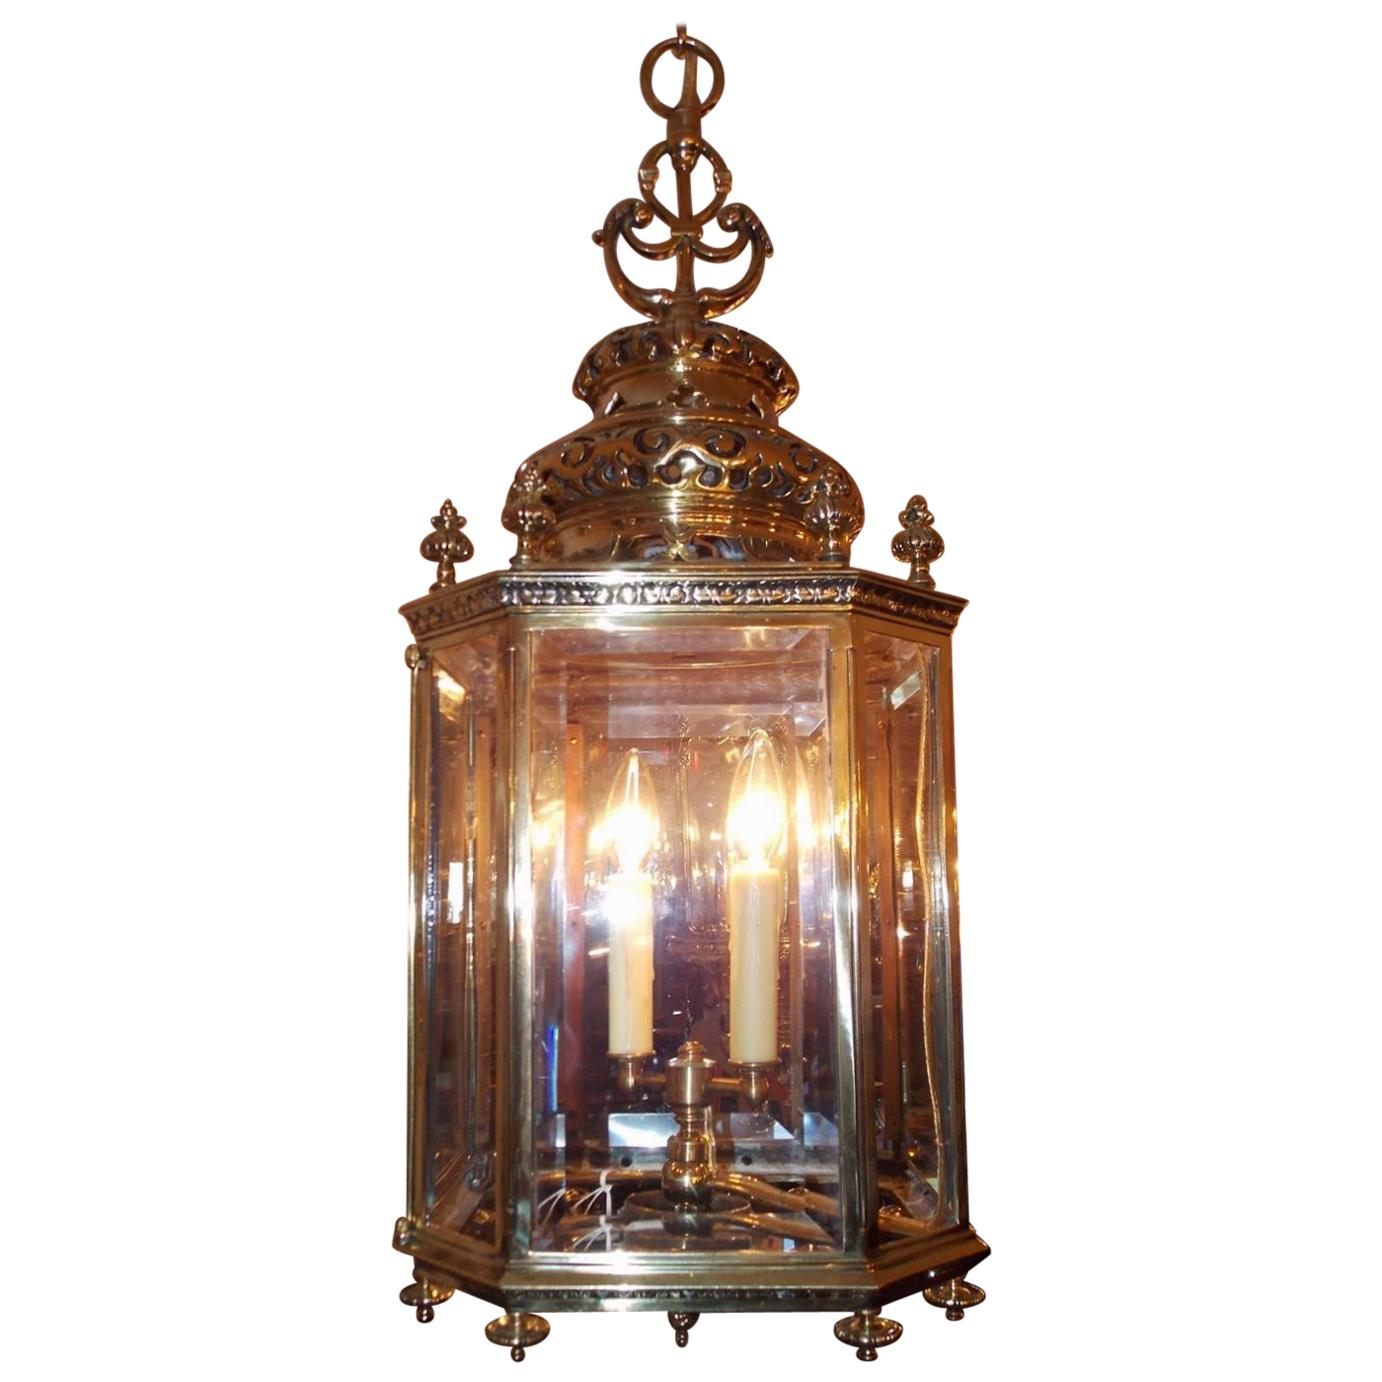 English Brass Octagon Decorative Dome and Beveled Glass Hall Lantern, Circa 1820